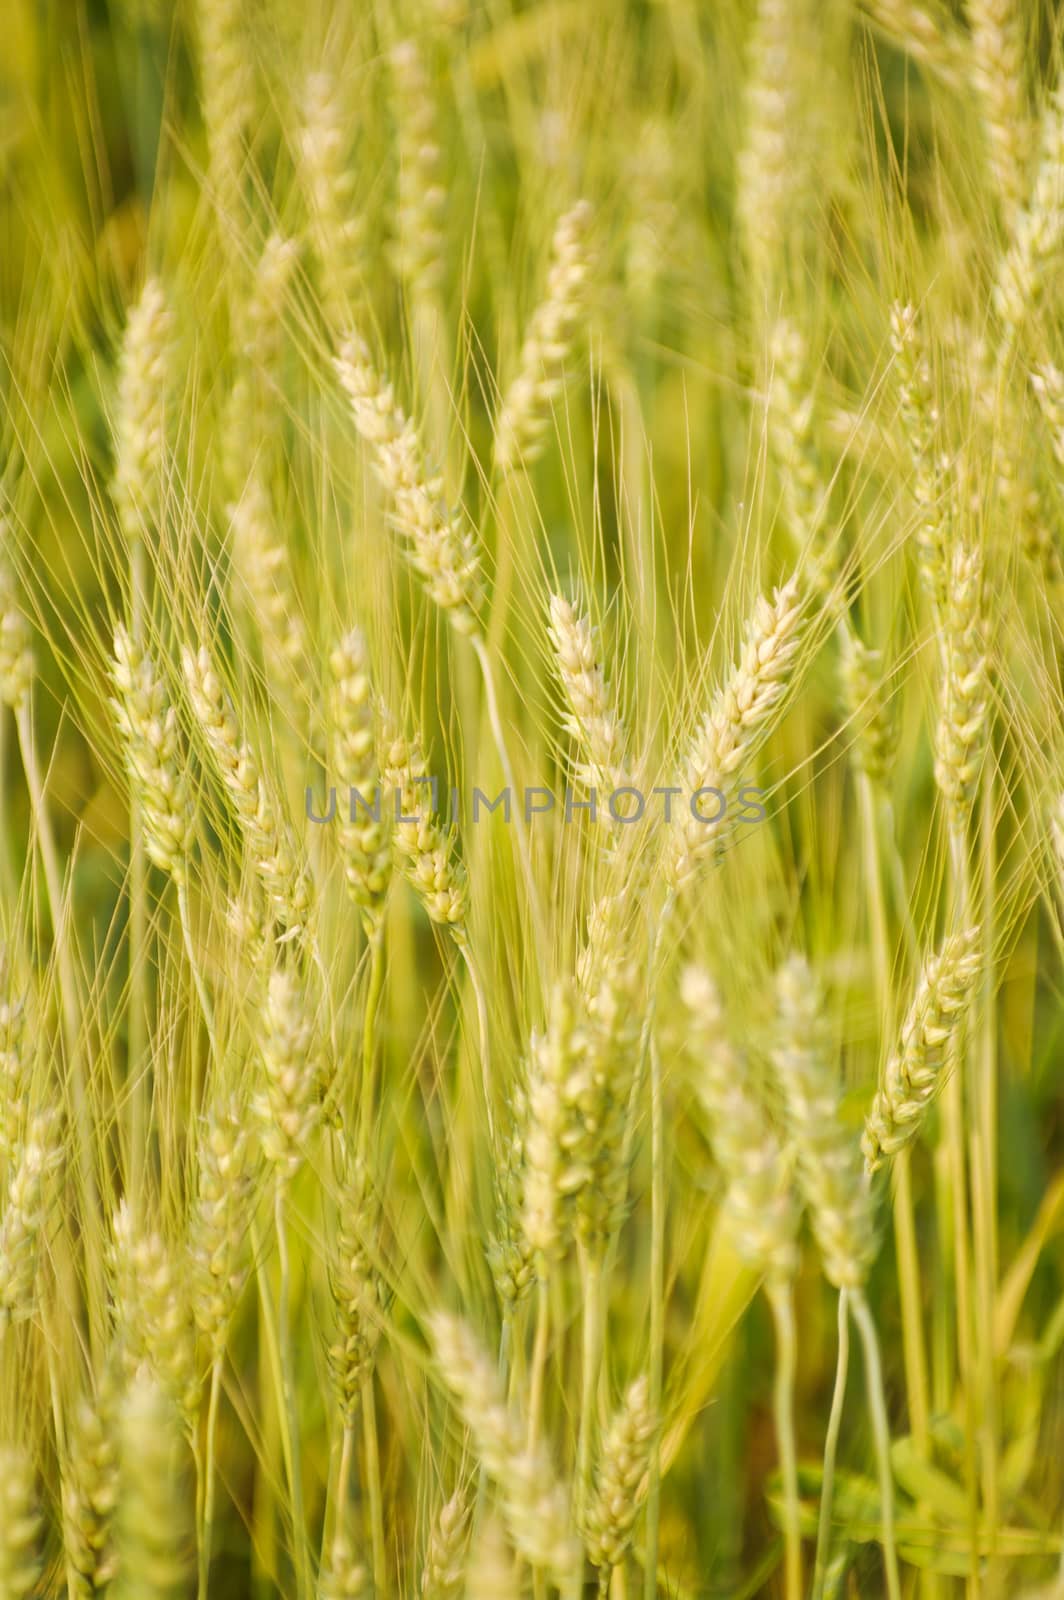 green barley field background  by 2nix